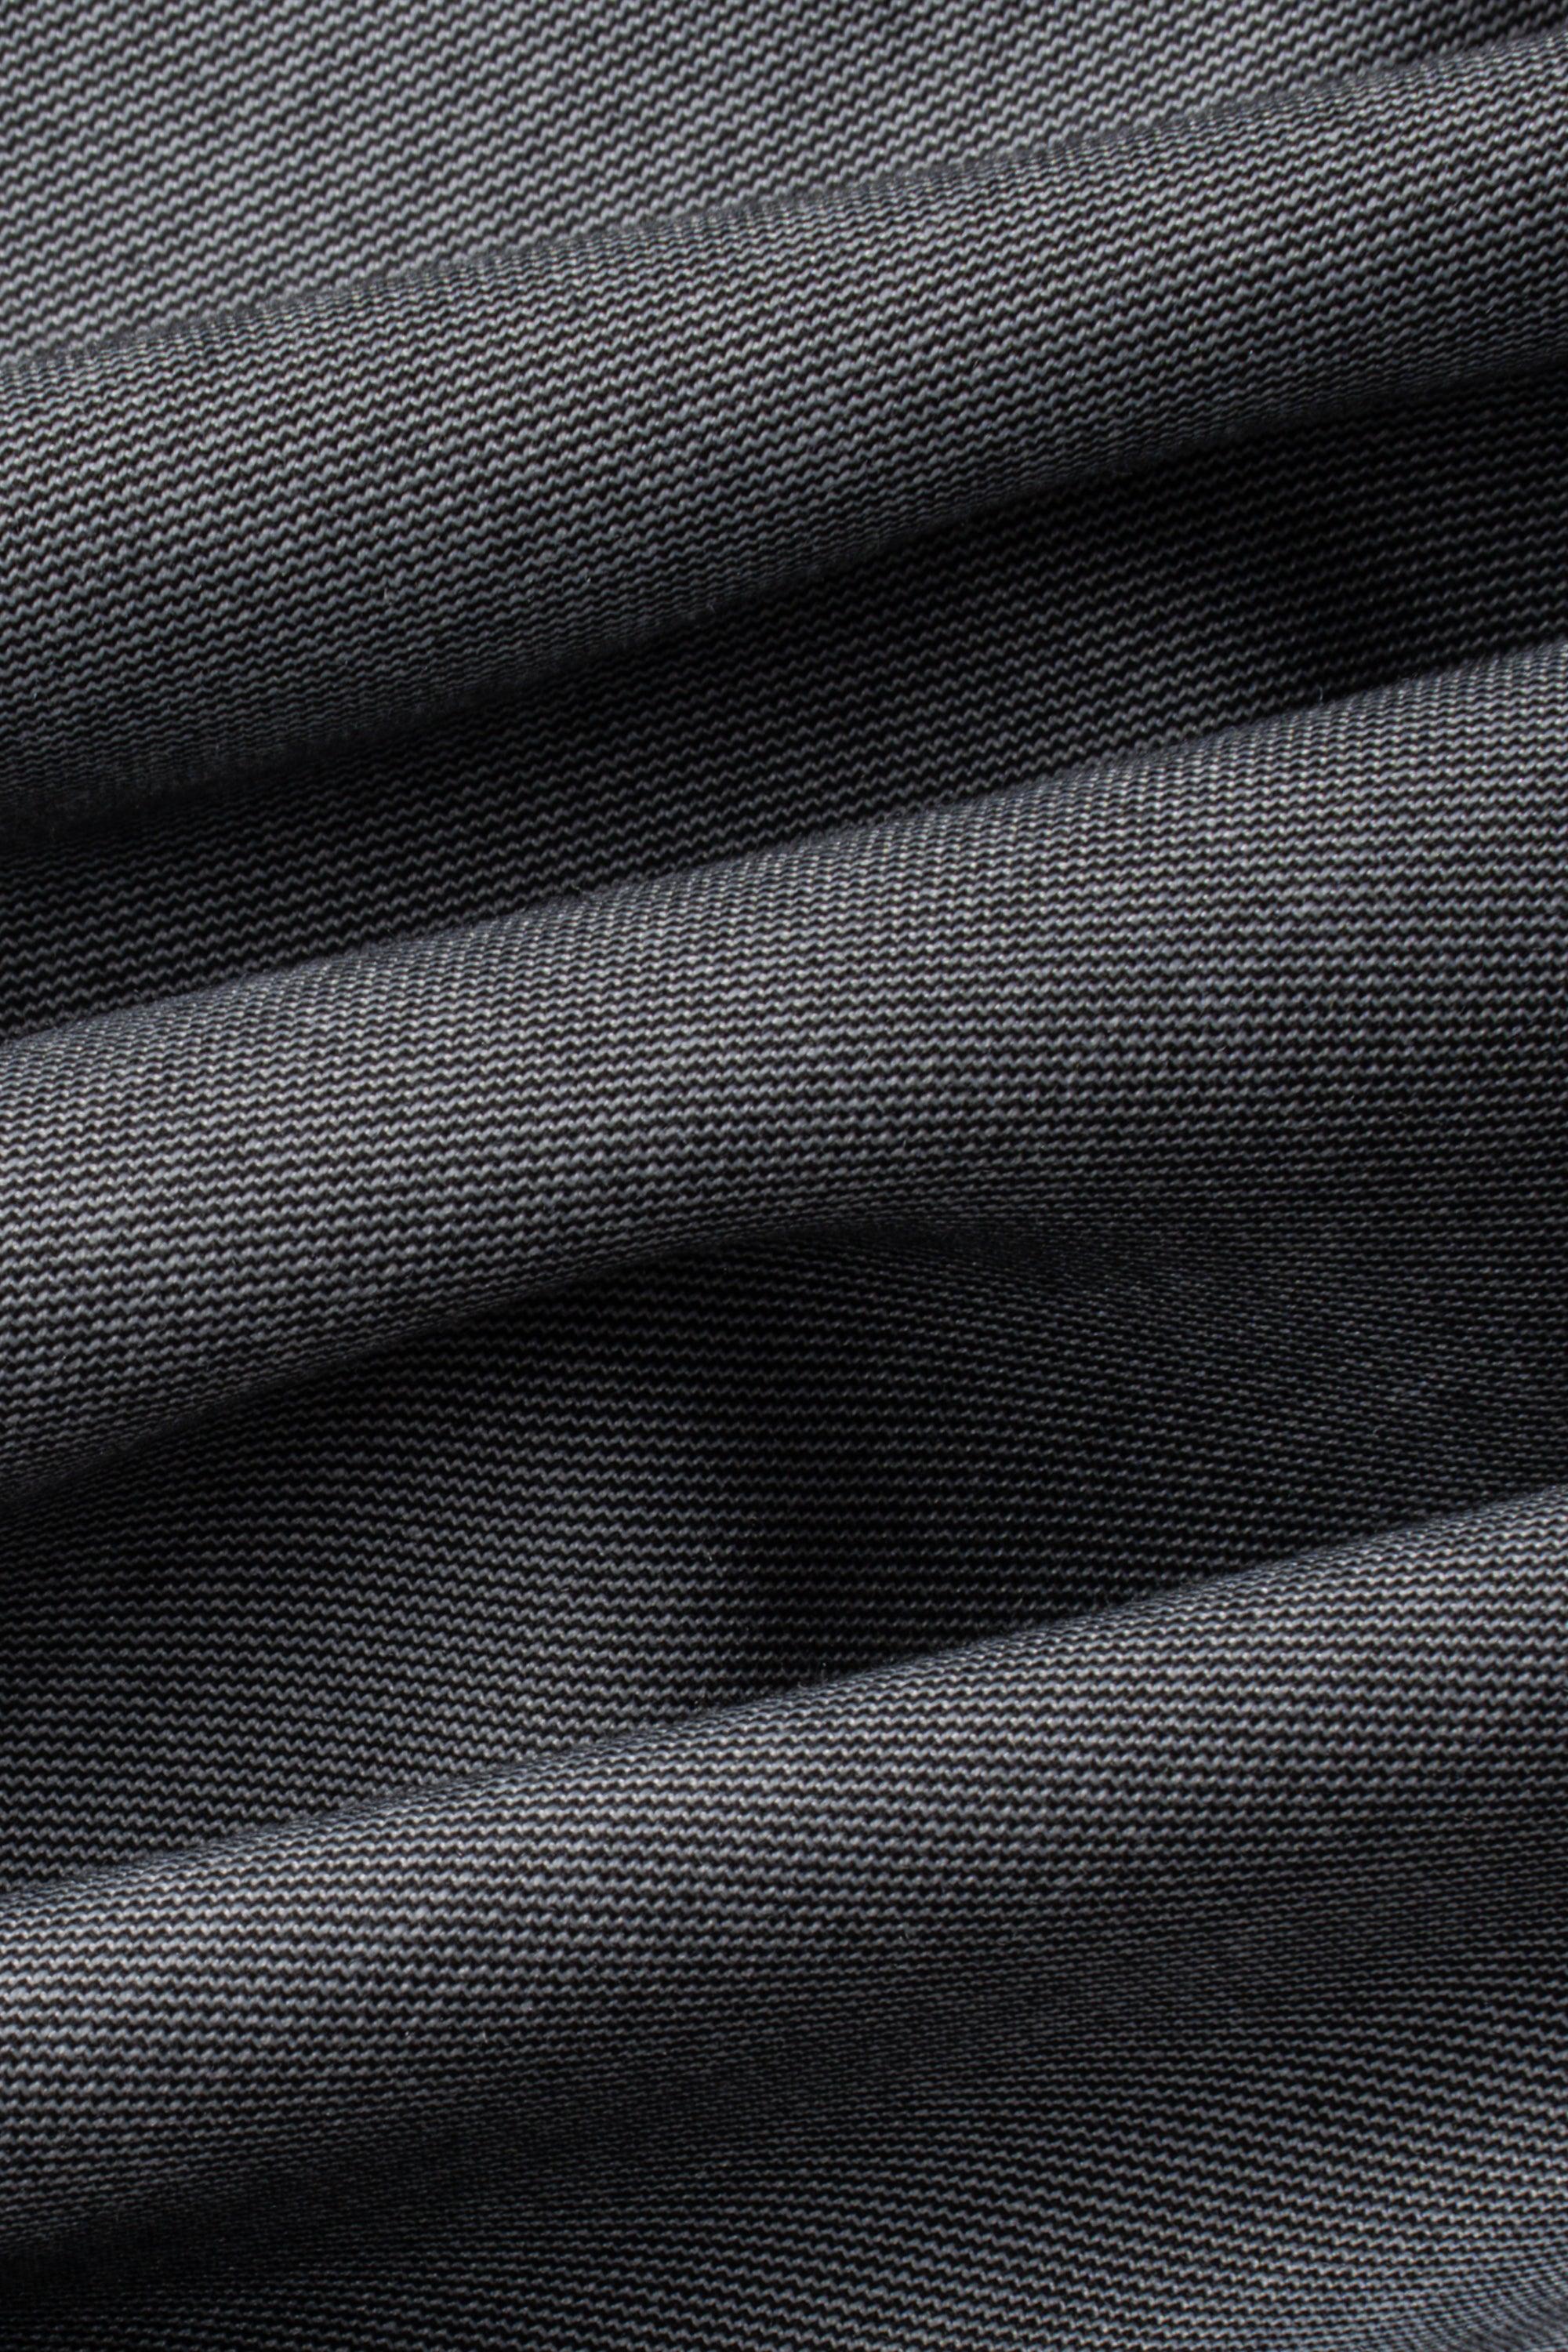 Reegan grey regular three piece suit fabric swatch